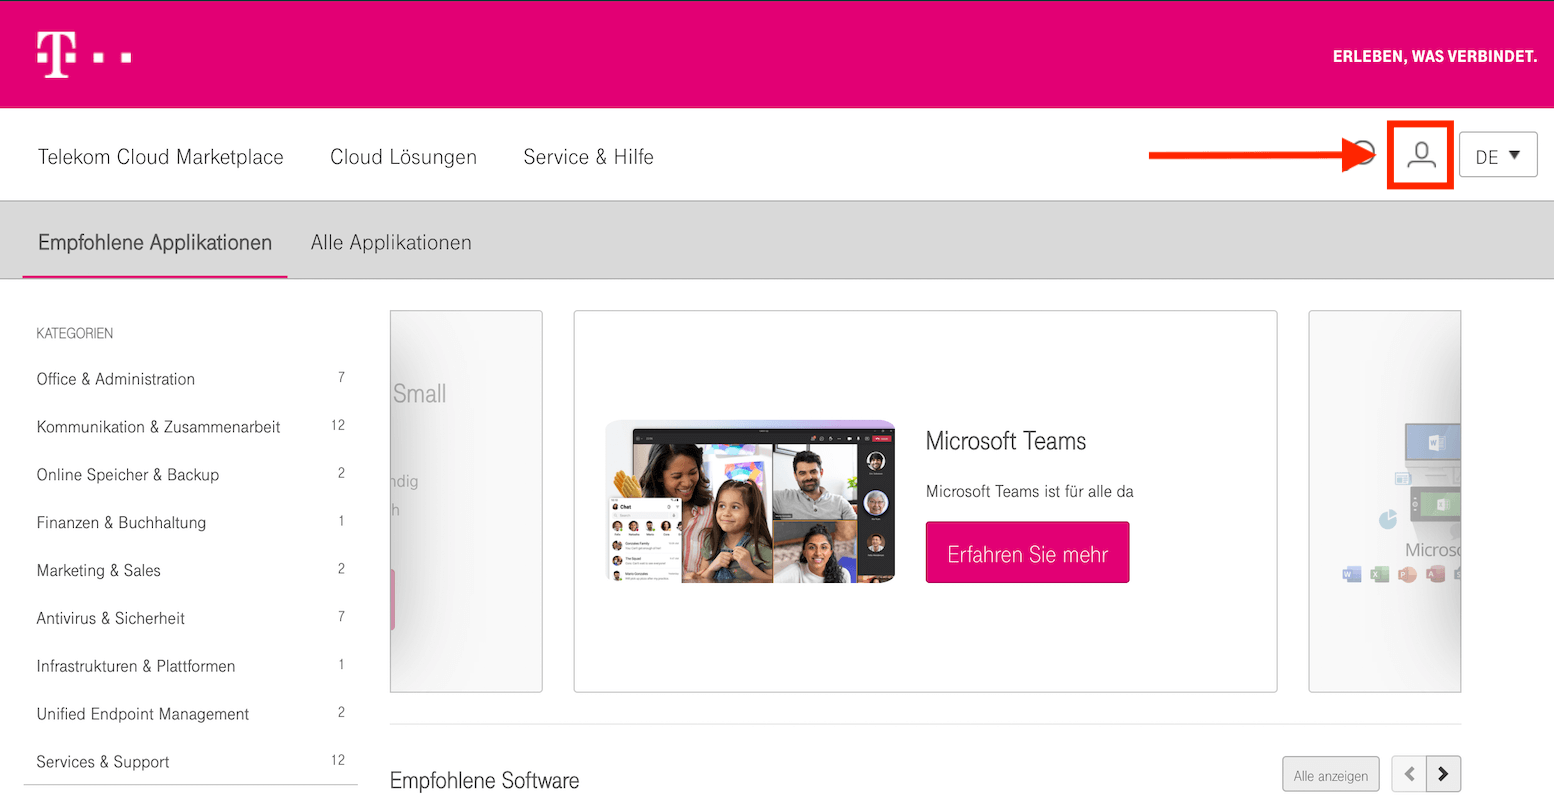 Account im Telekom Cloud Marketplace anlegen